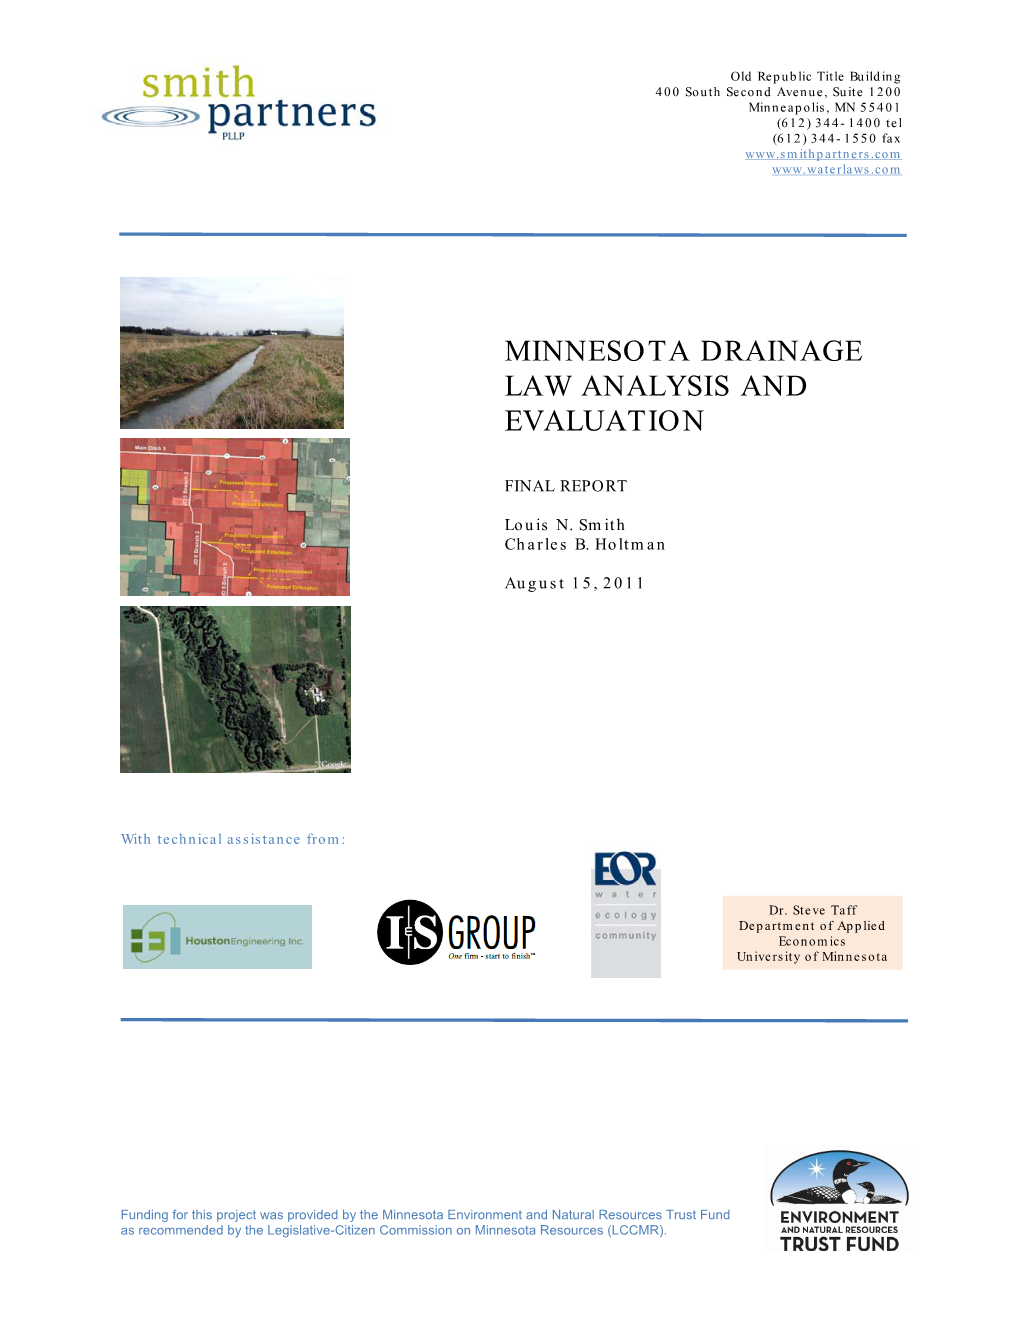 Minnesota Drainage Law Analysis and Evaluation